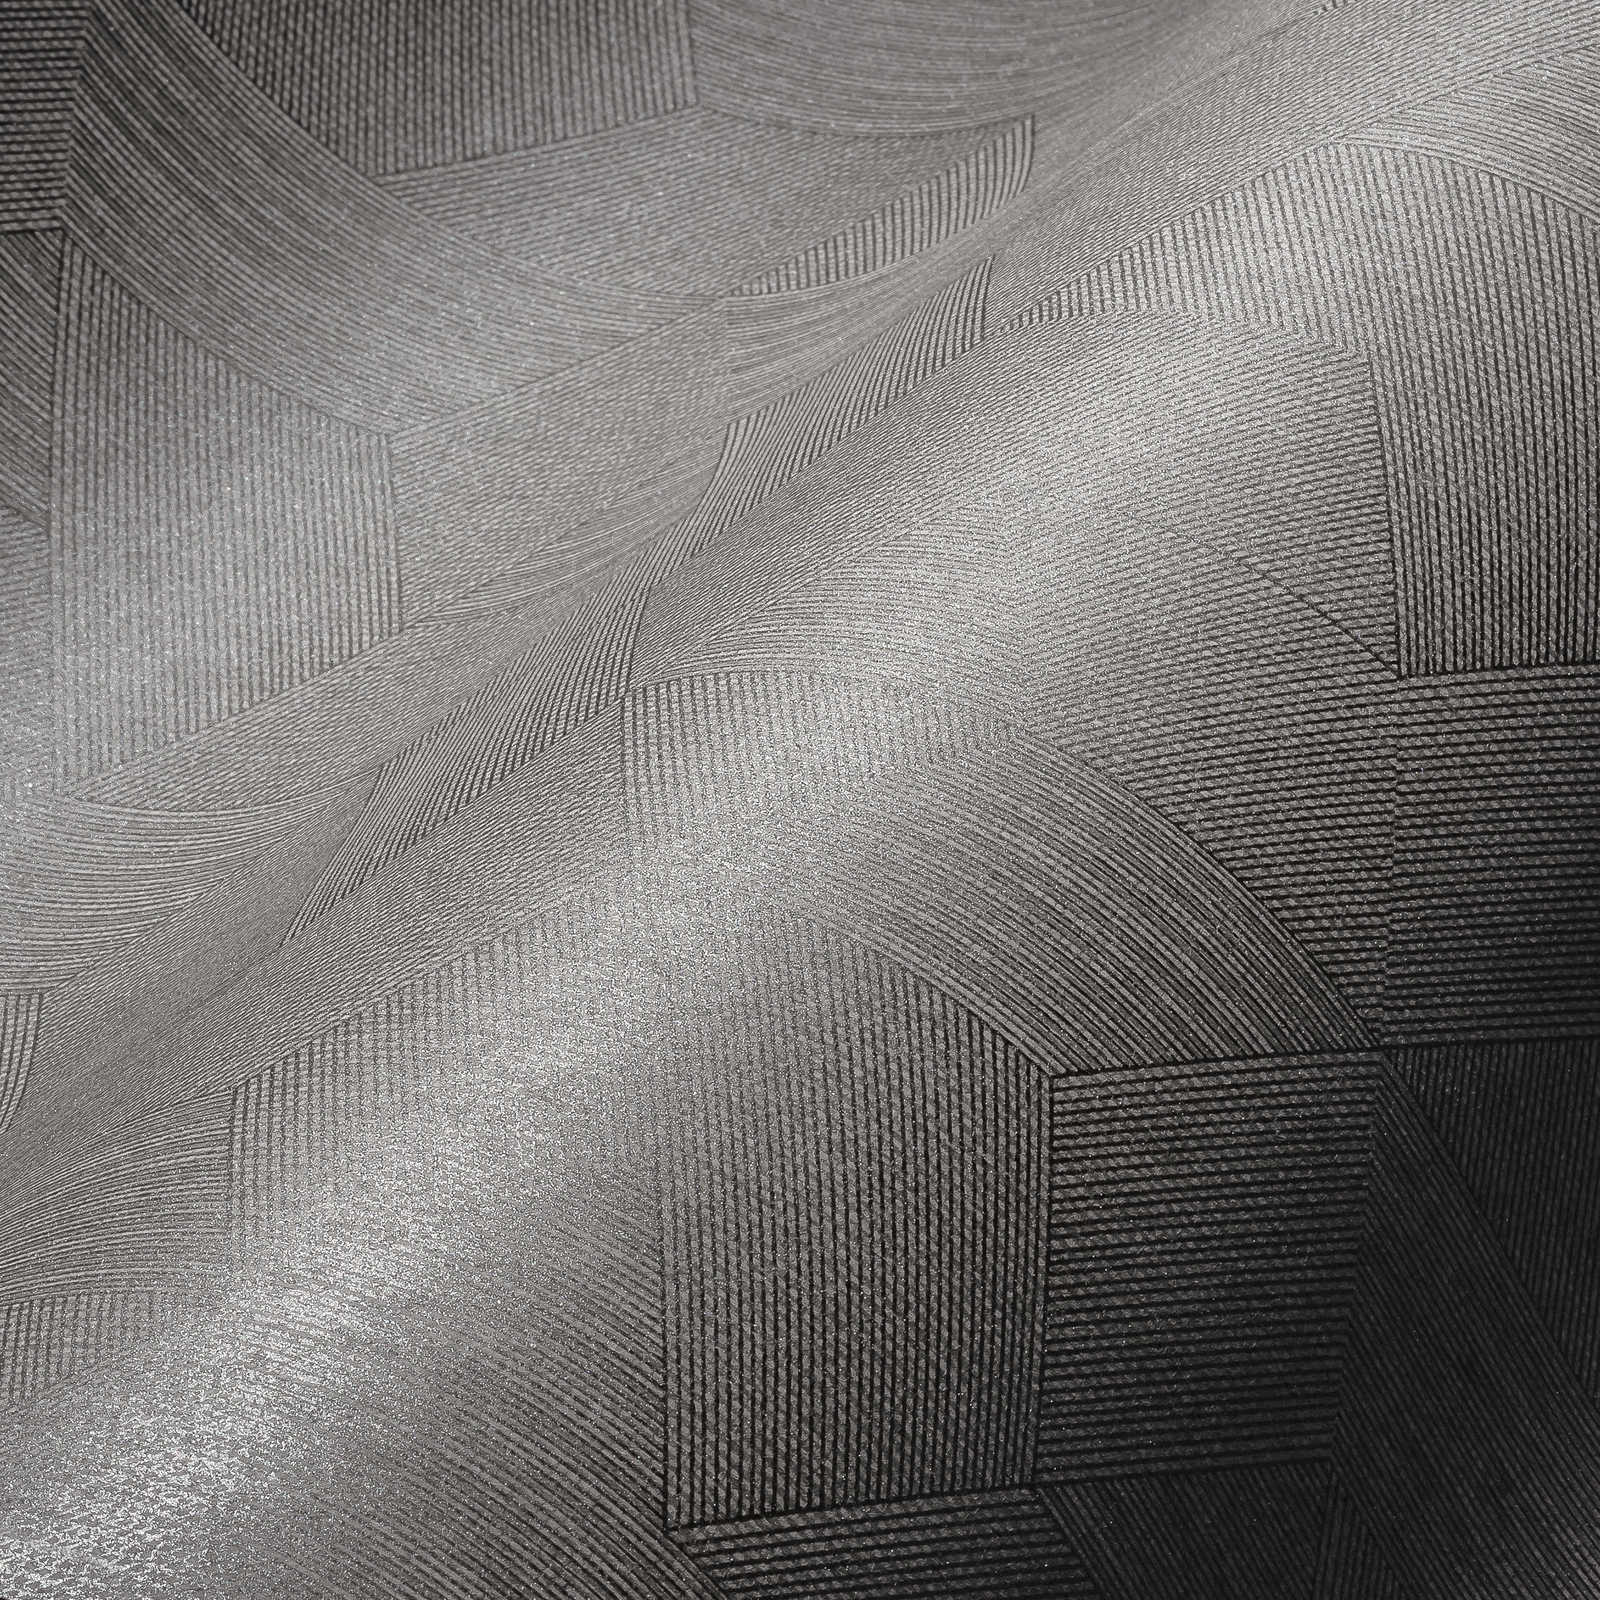             Tapete Grau mit Grafik-Muster & Glanzeffekt – Grau, Braun
        